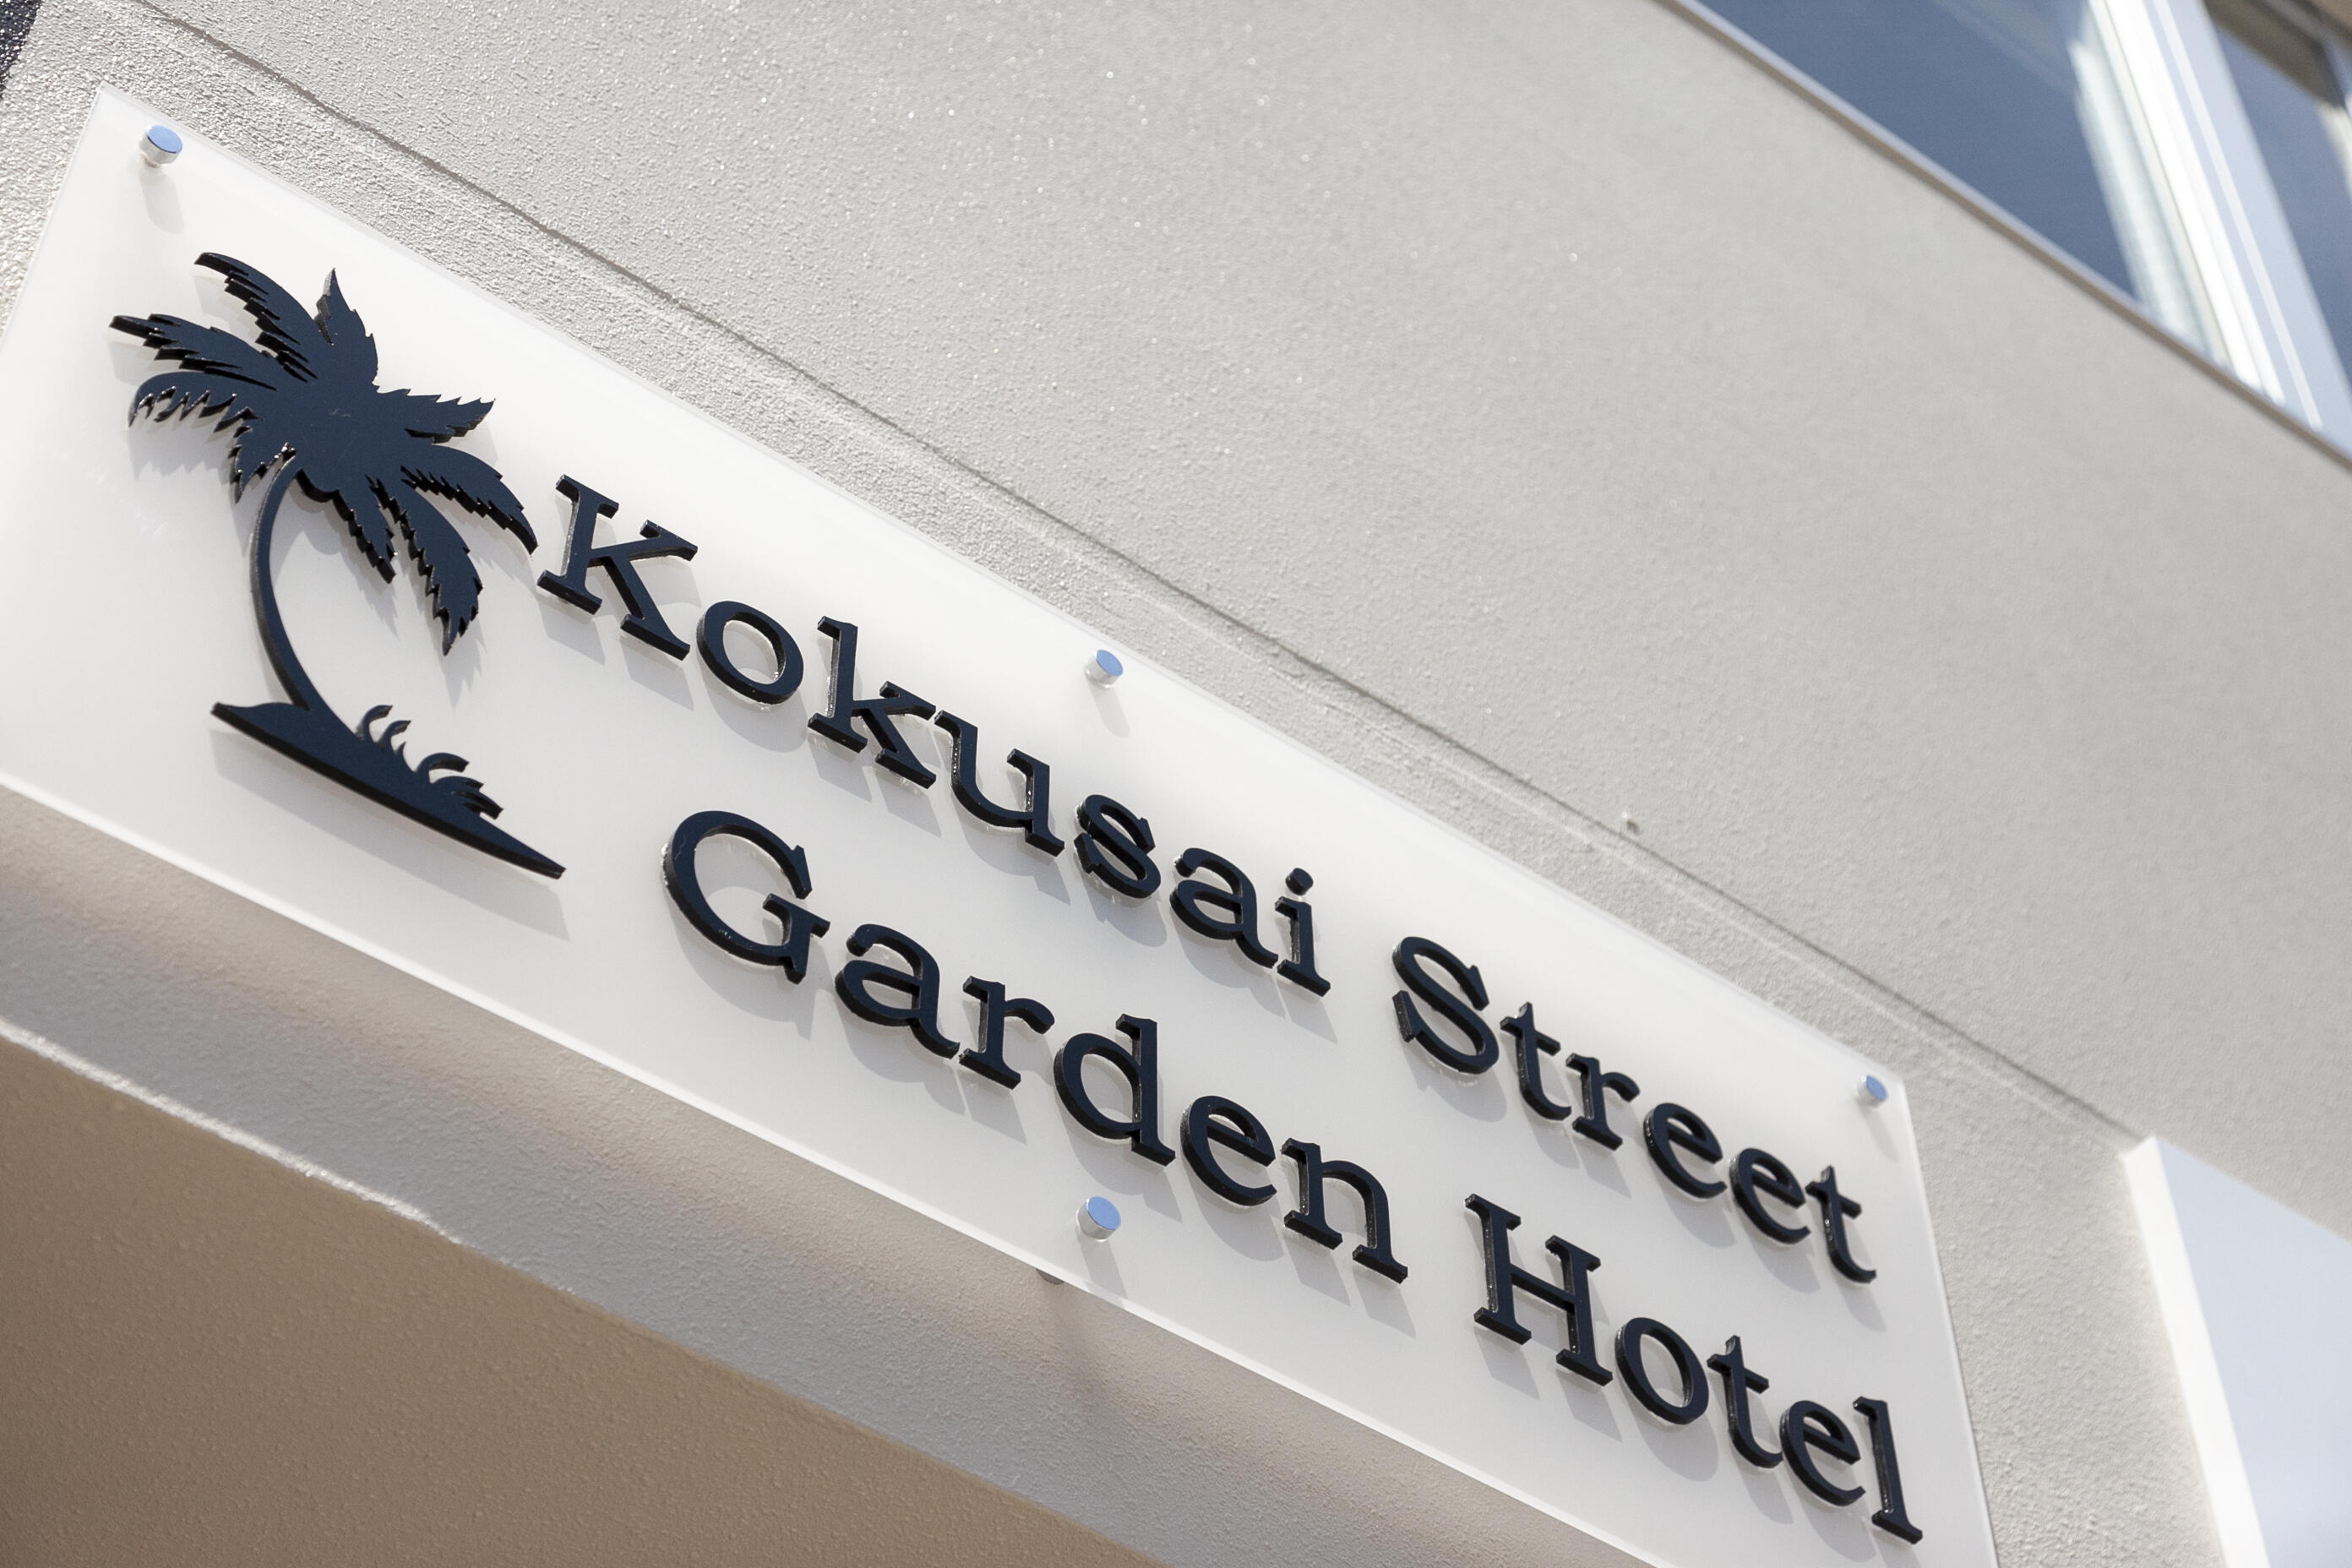 Kokusai Street Garden Hotel